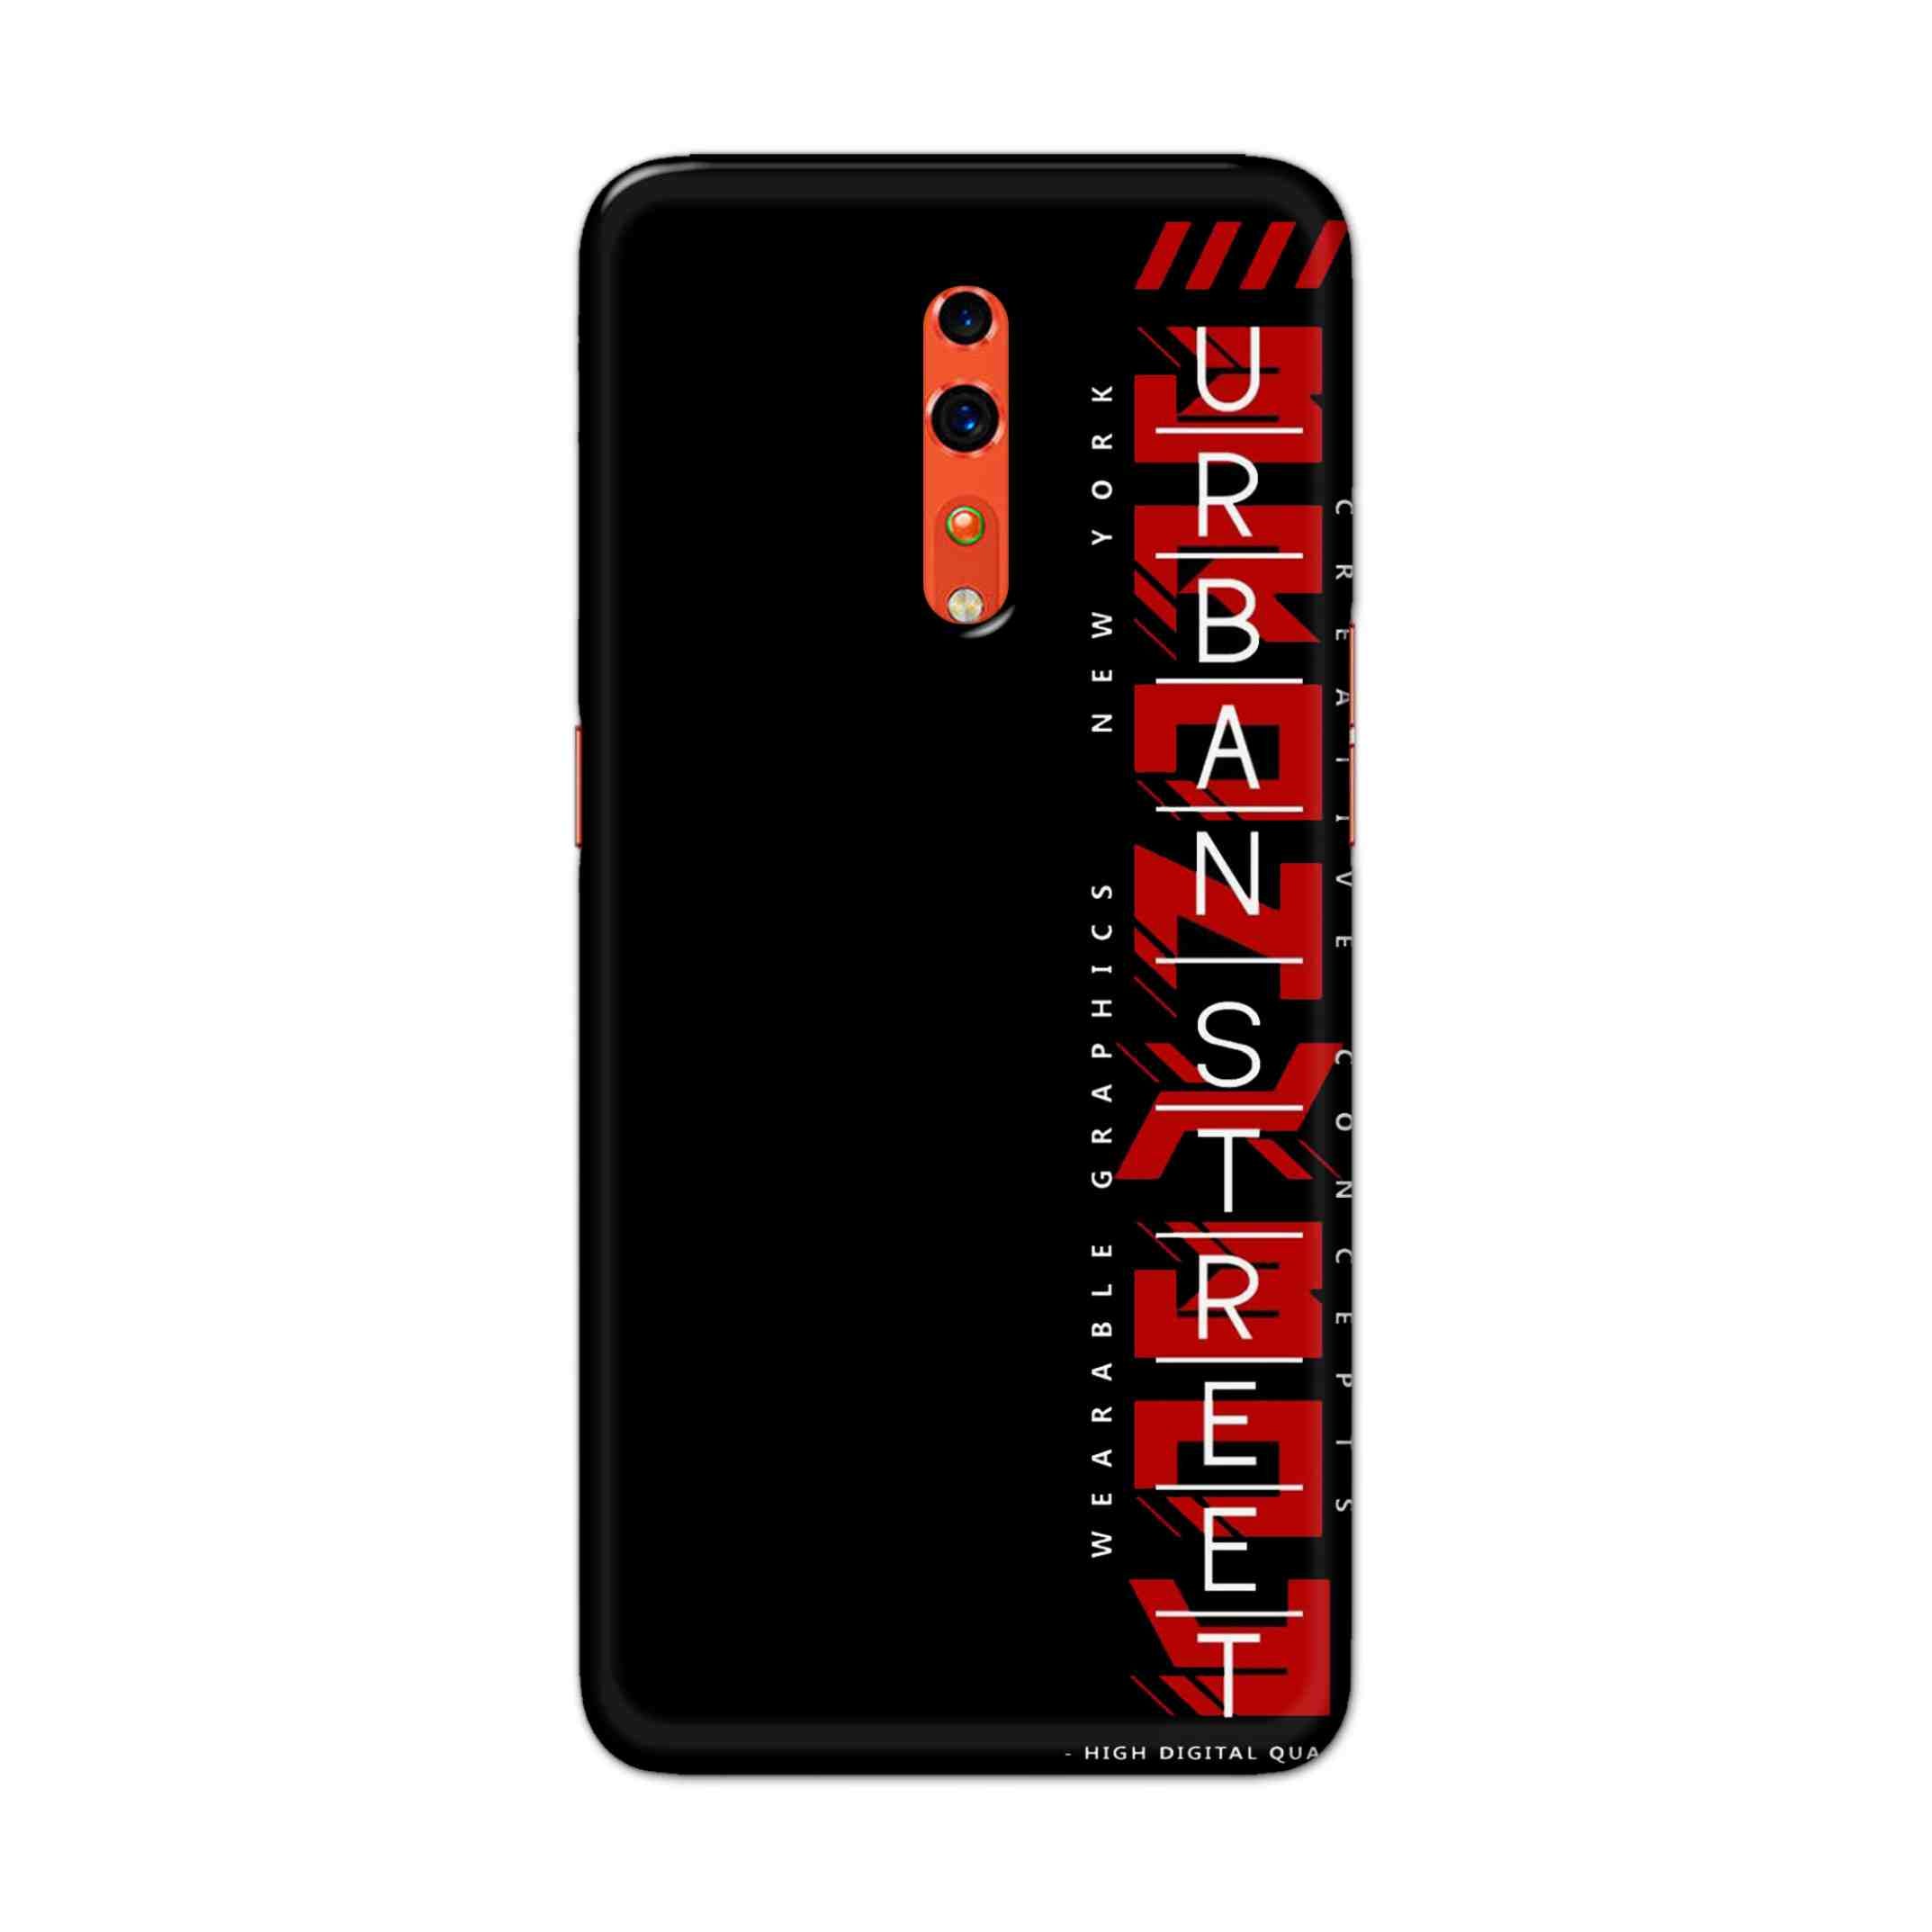 Buy Urban Street Hard Back Mobile Phone Case Cover For OPPO Reno Z Online